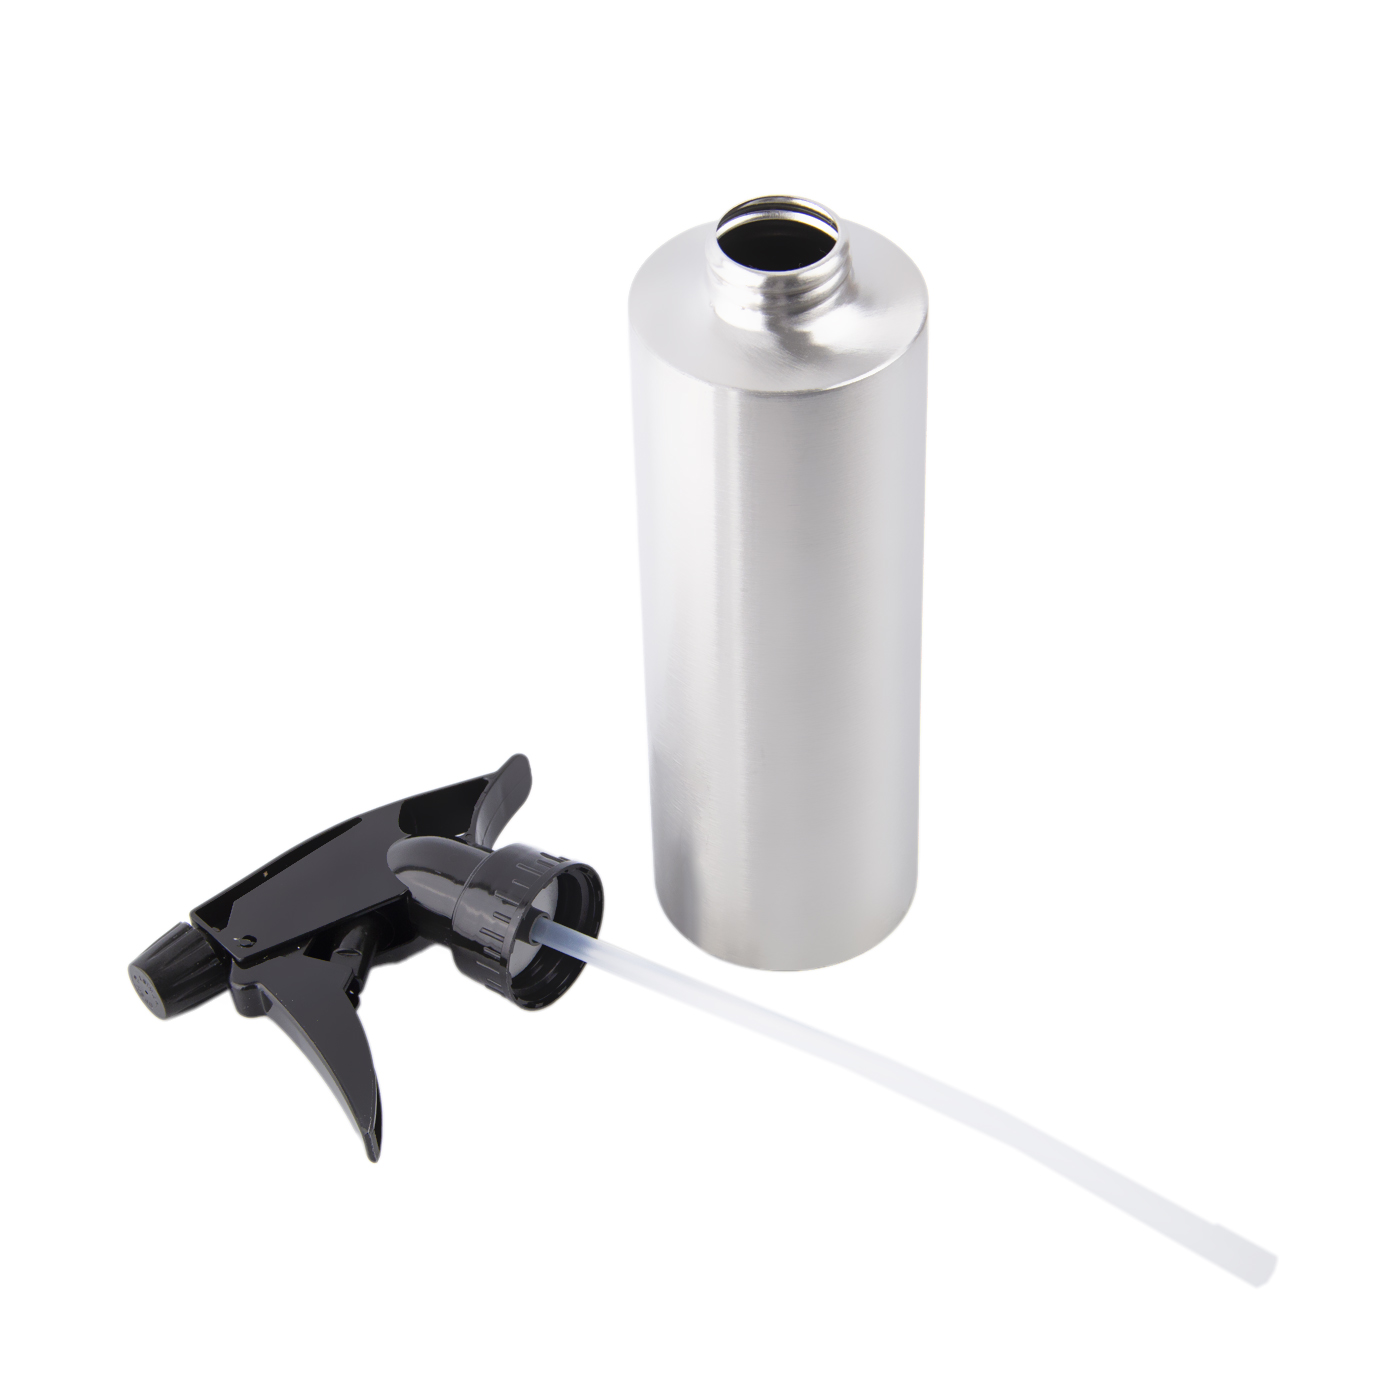 12 oz. Stainless Steel Spray Bottle With Trigger Sprayer1